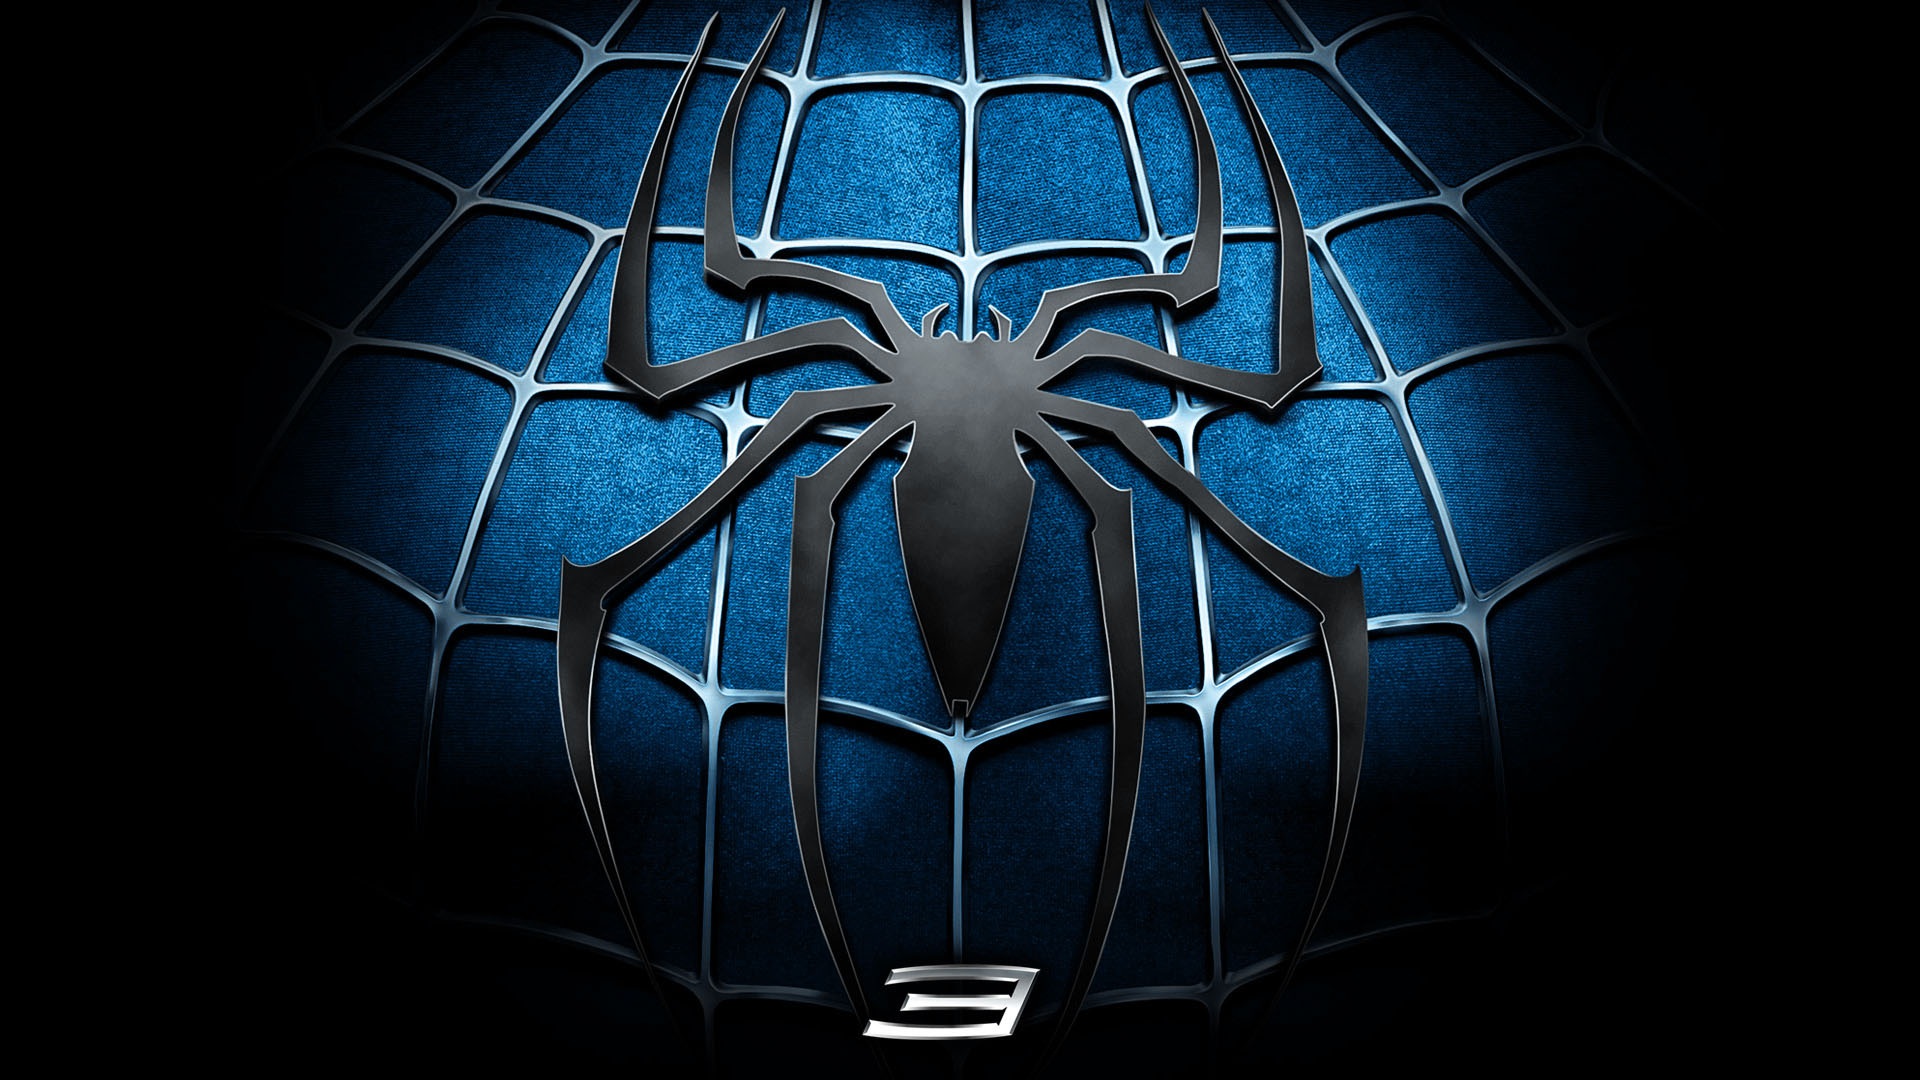 spiderman 3 logo wallpaper hd wallpaper 1920x1080